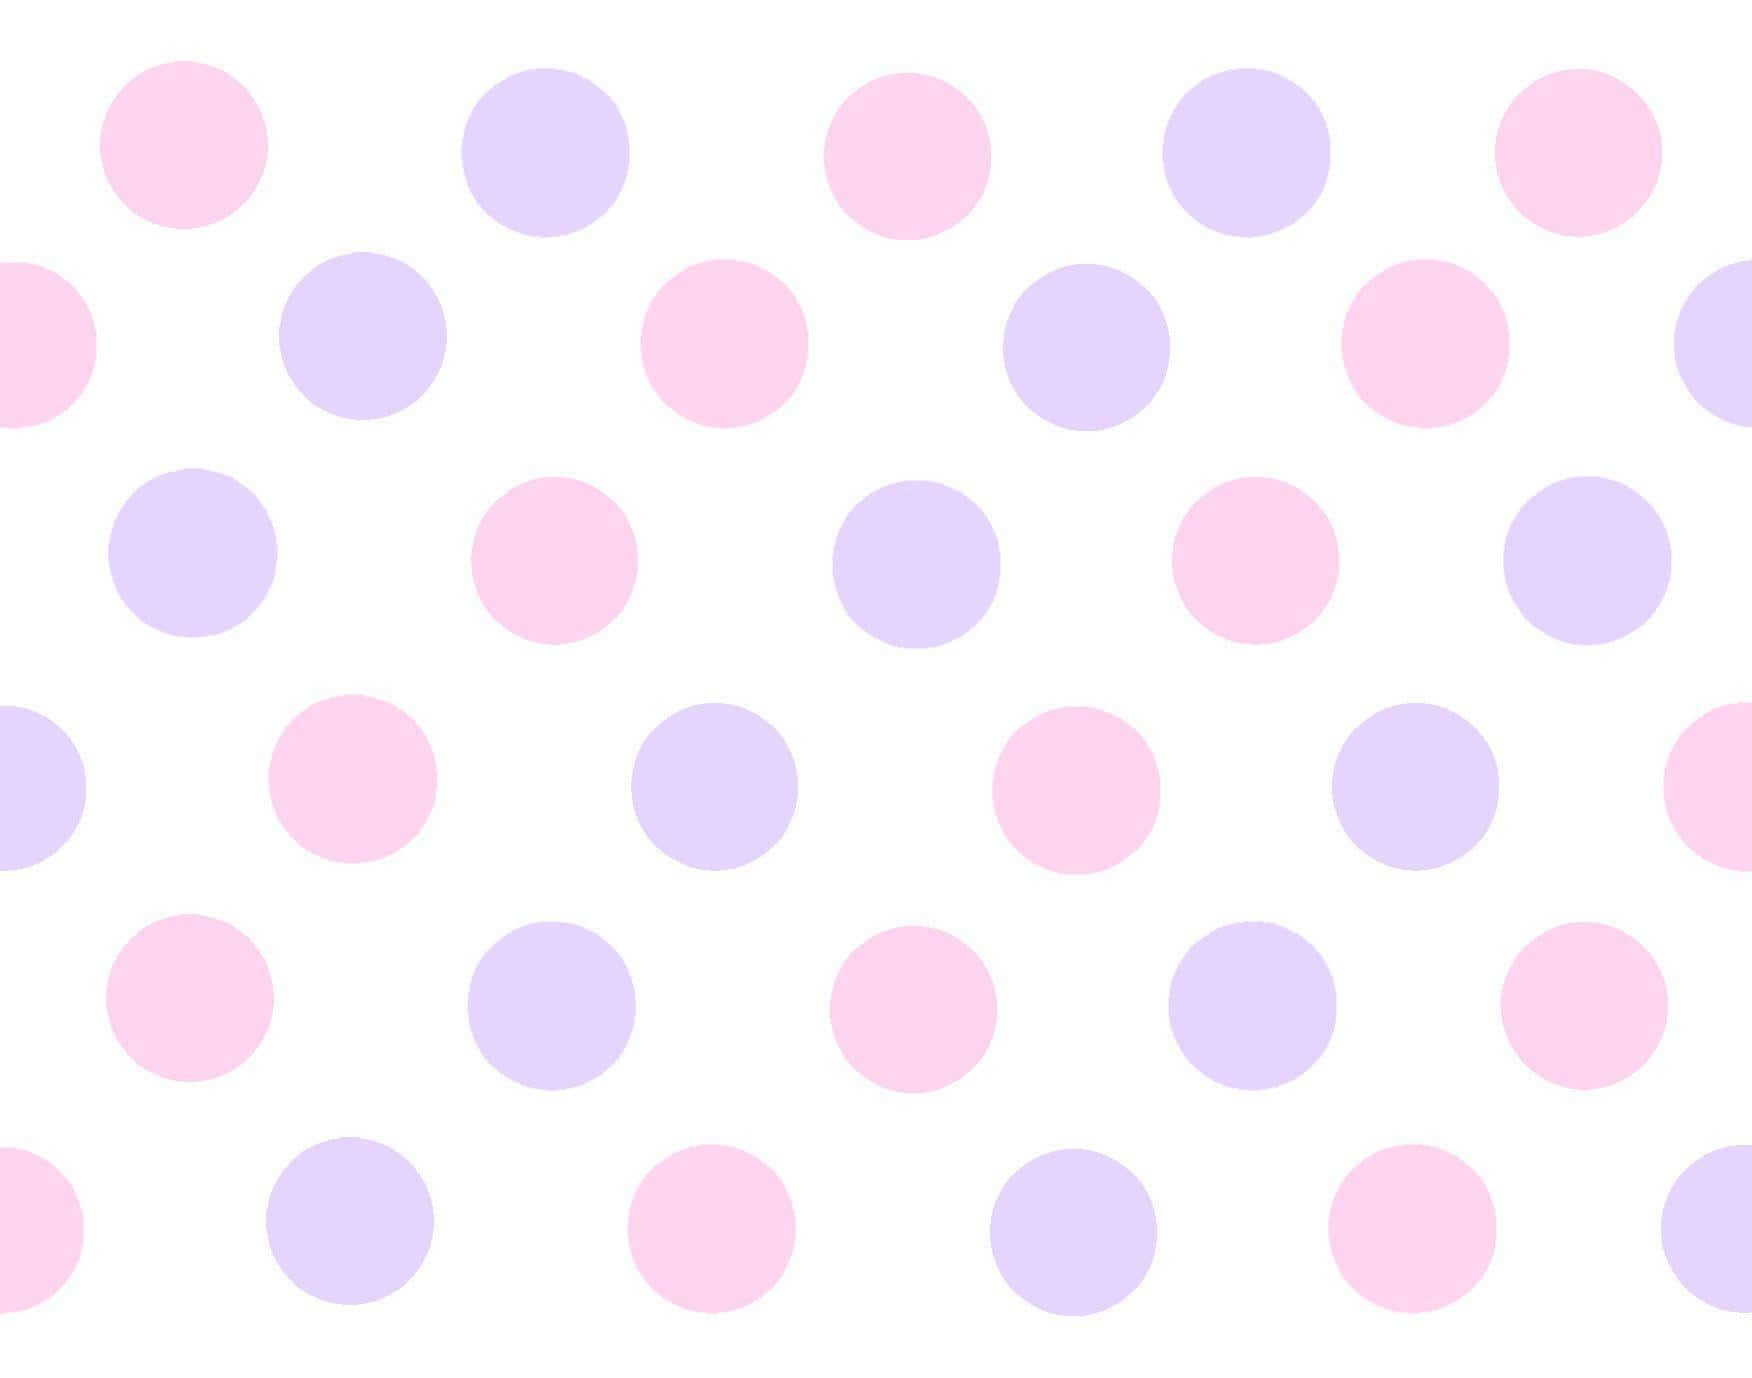 A Fun and Stylish Polka Dot Background